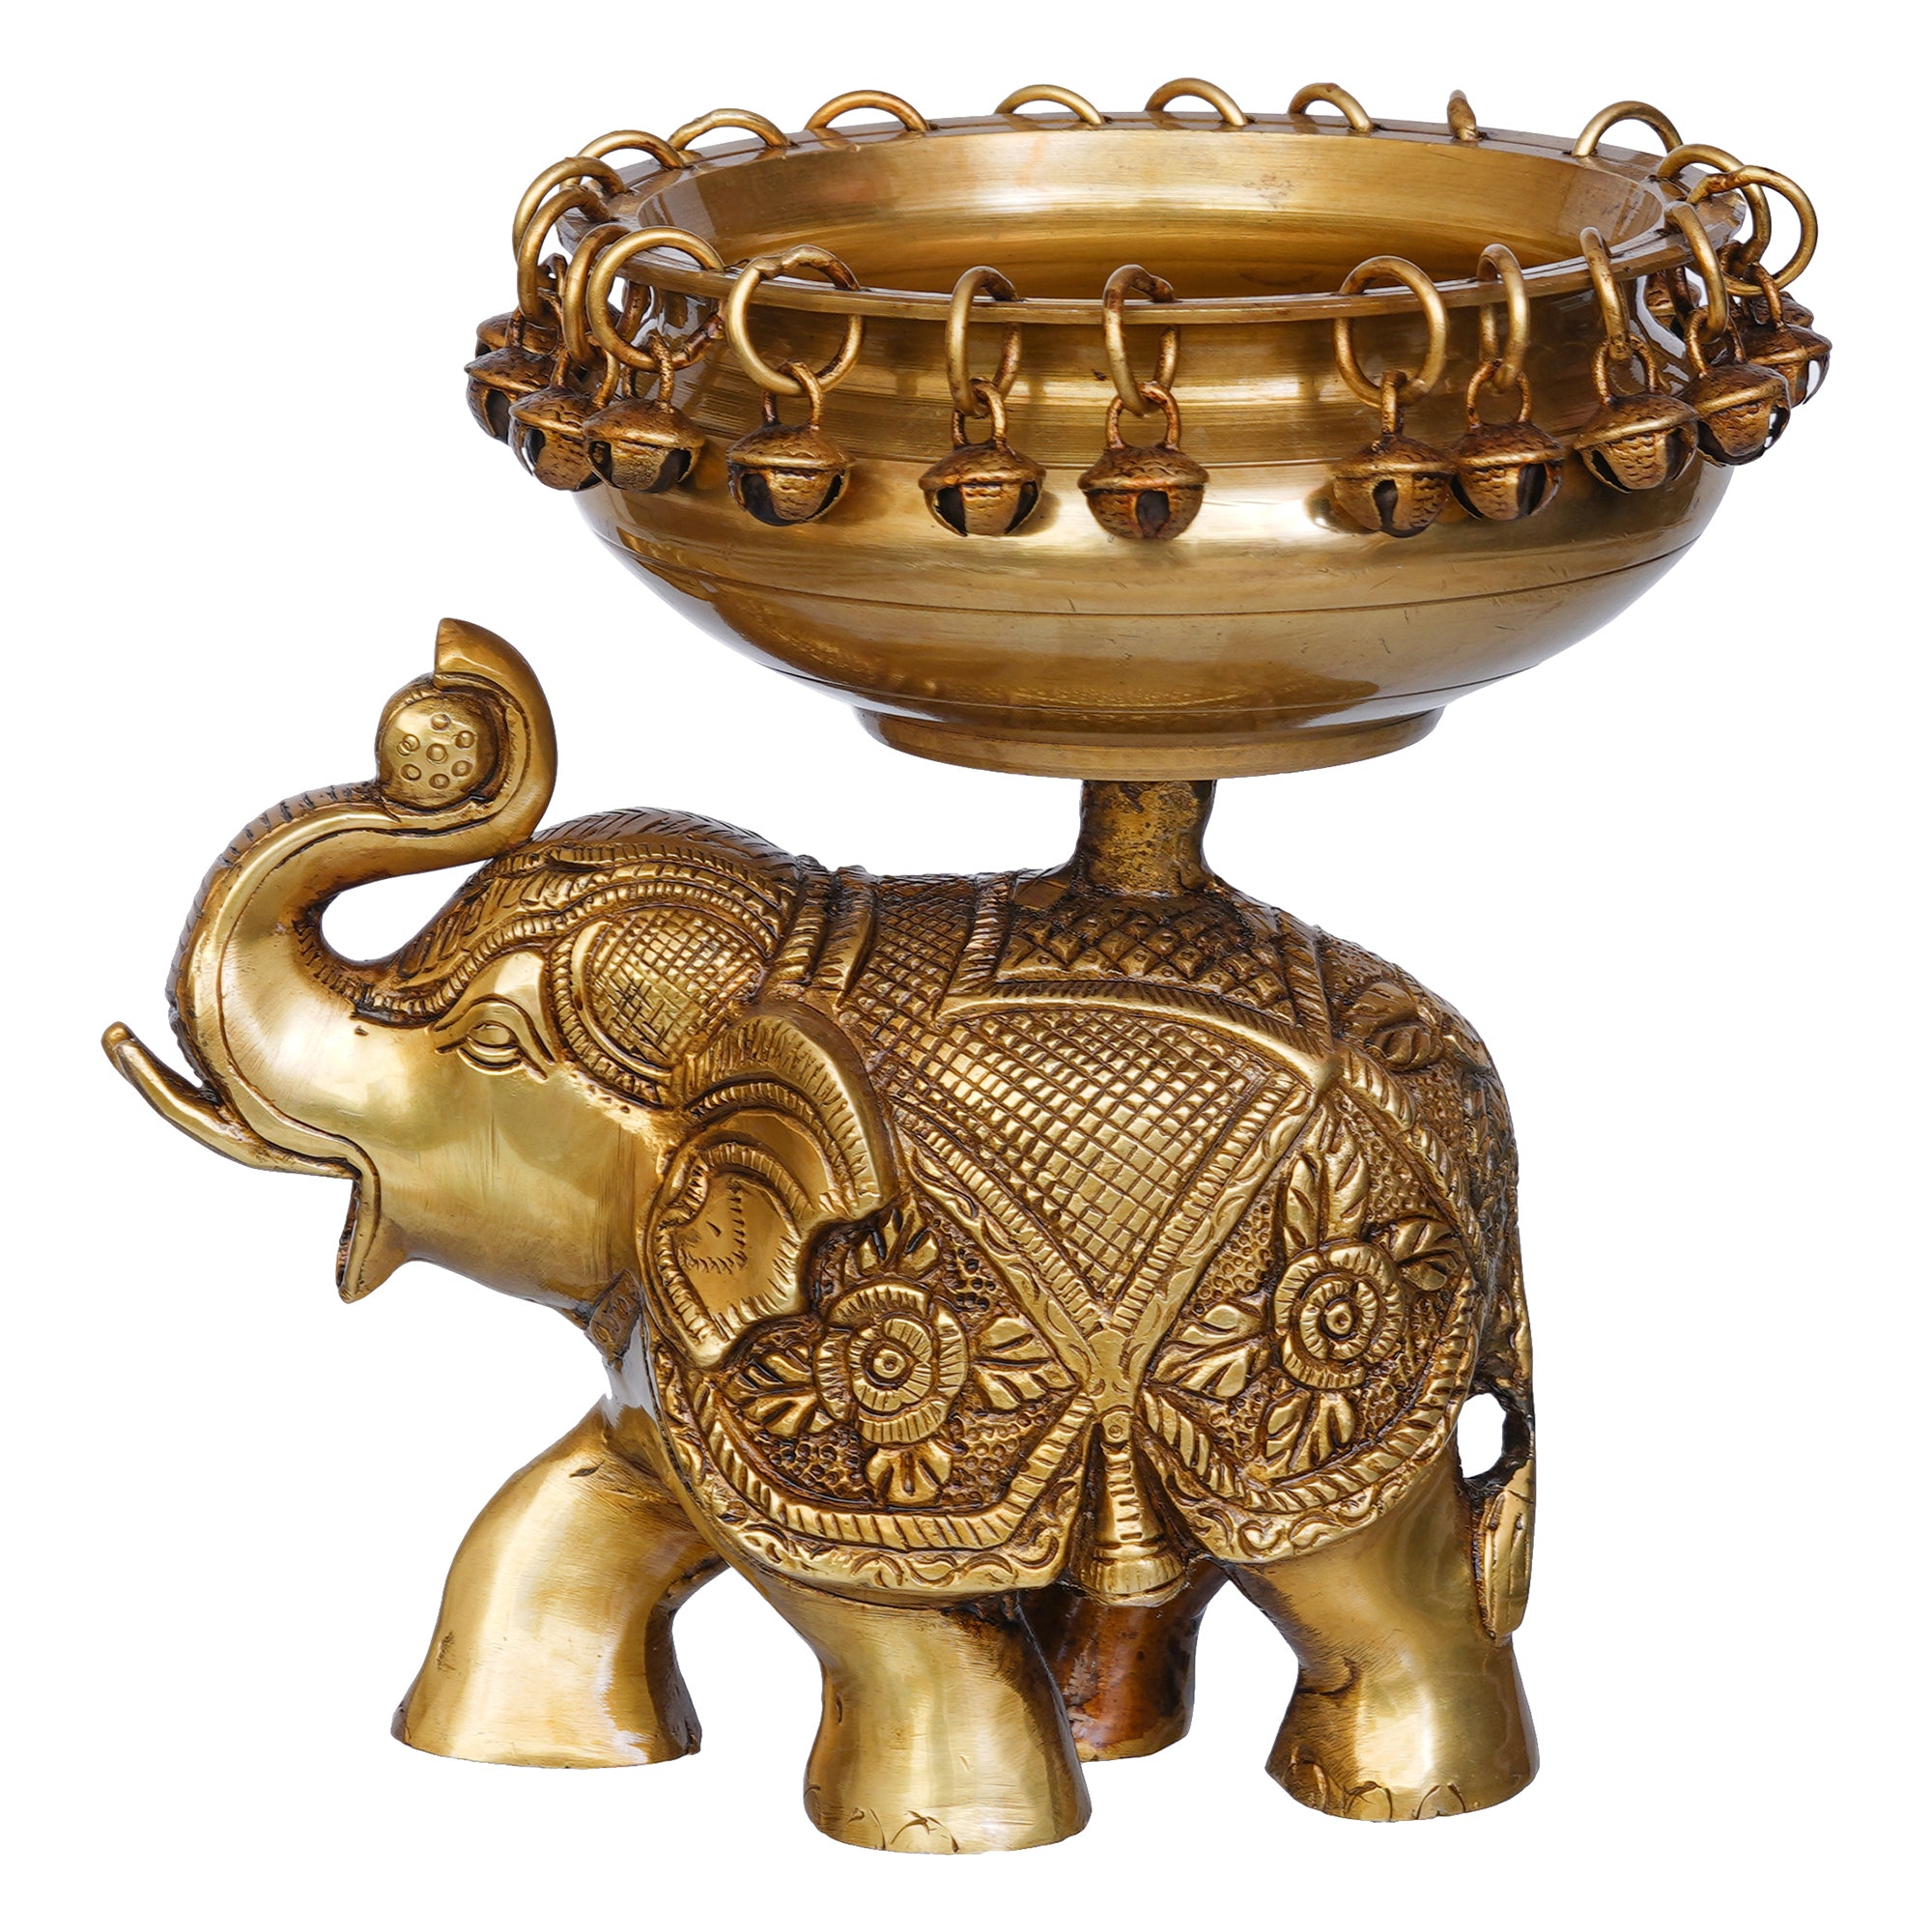 Golden Brass Urli on Elephant Statue with Bells for Floating Flowers - Ethnic Design Decorative Showpiece for Home & Office Decor, Diwali Decoration - Gift for Housewarming, Navratri Festival 2